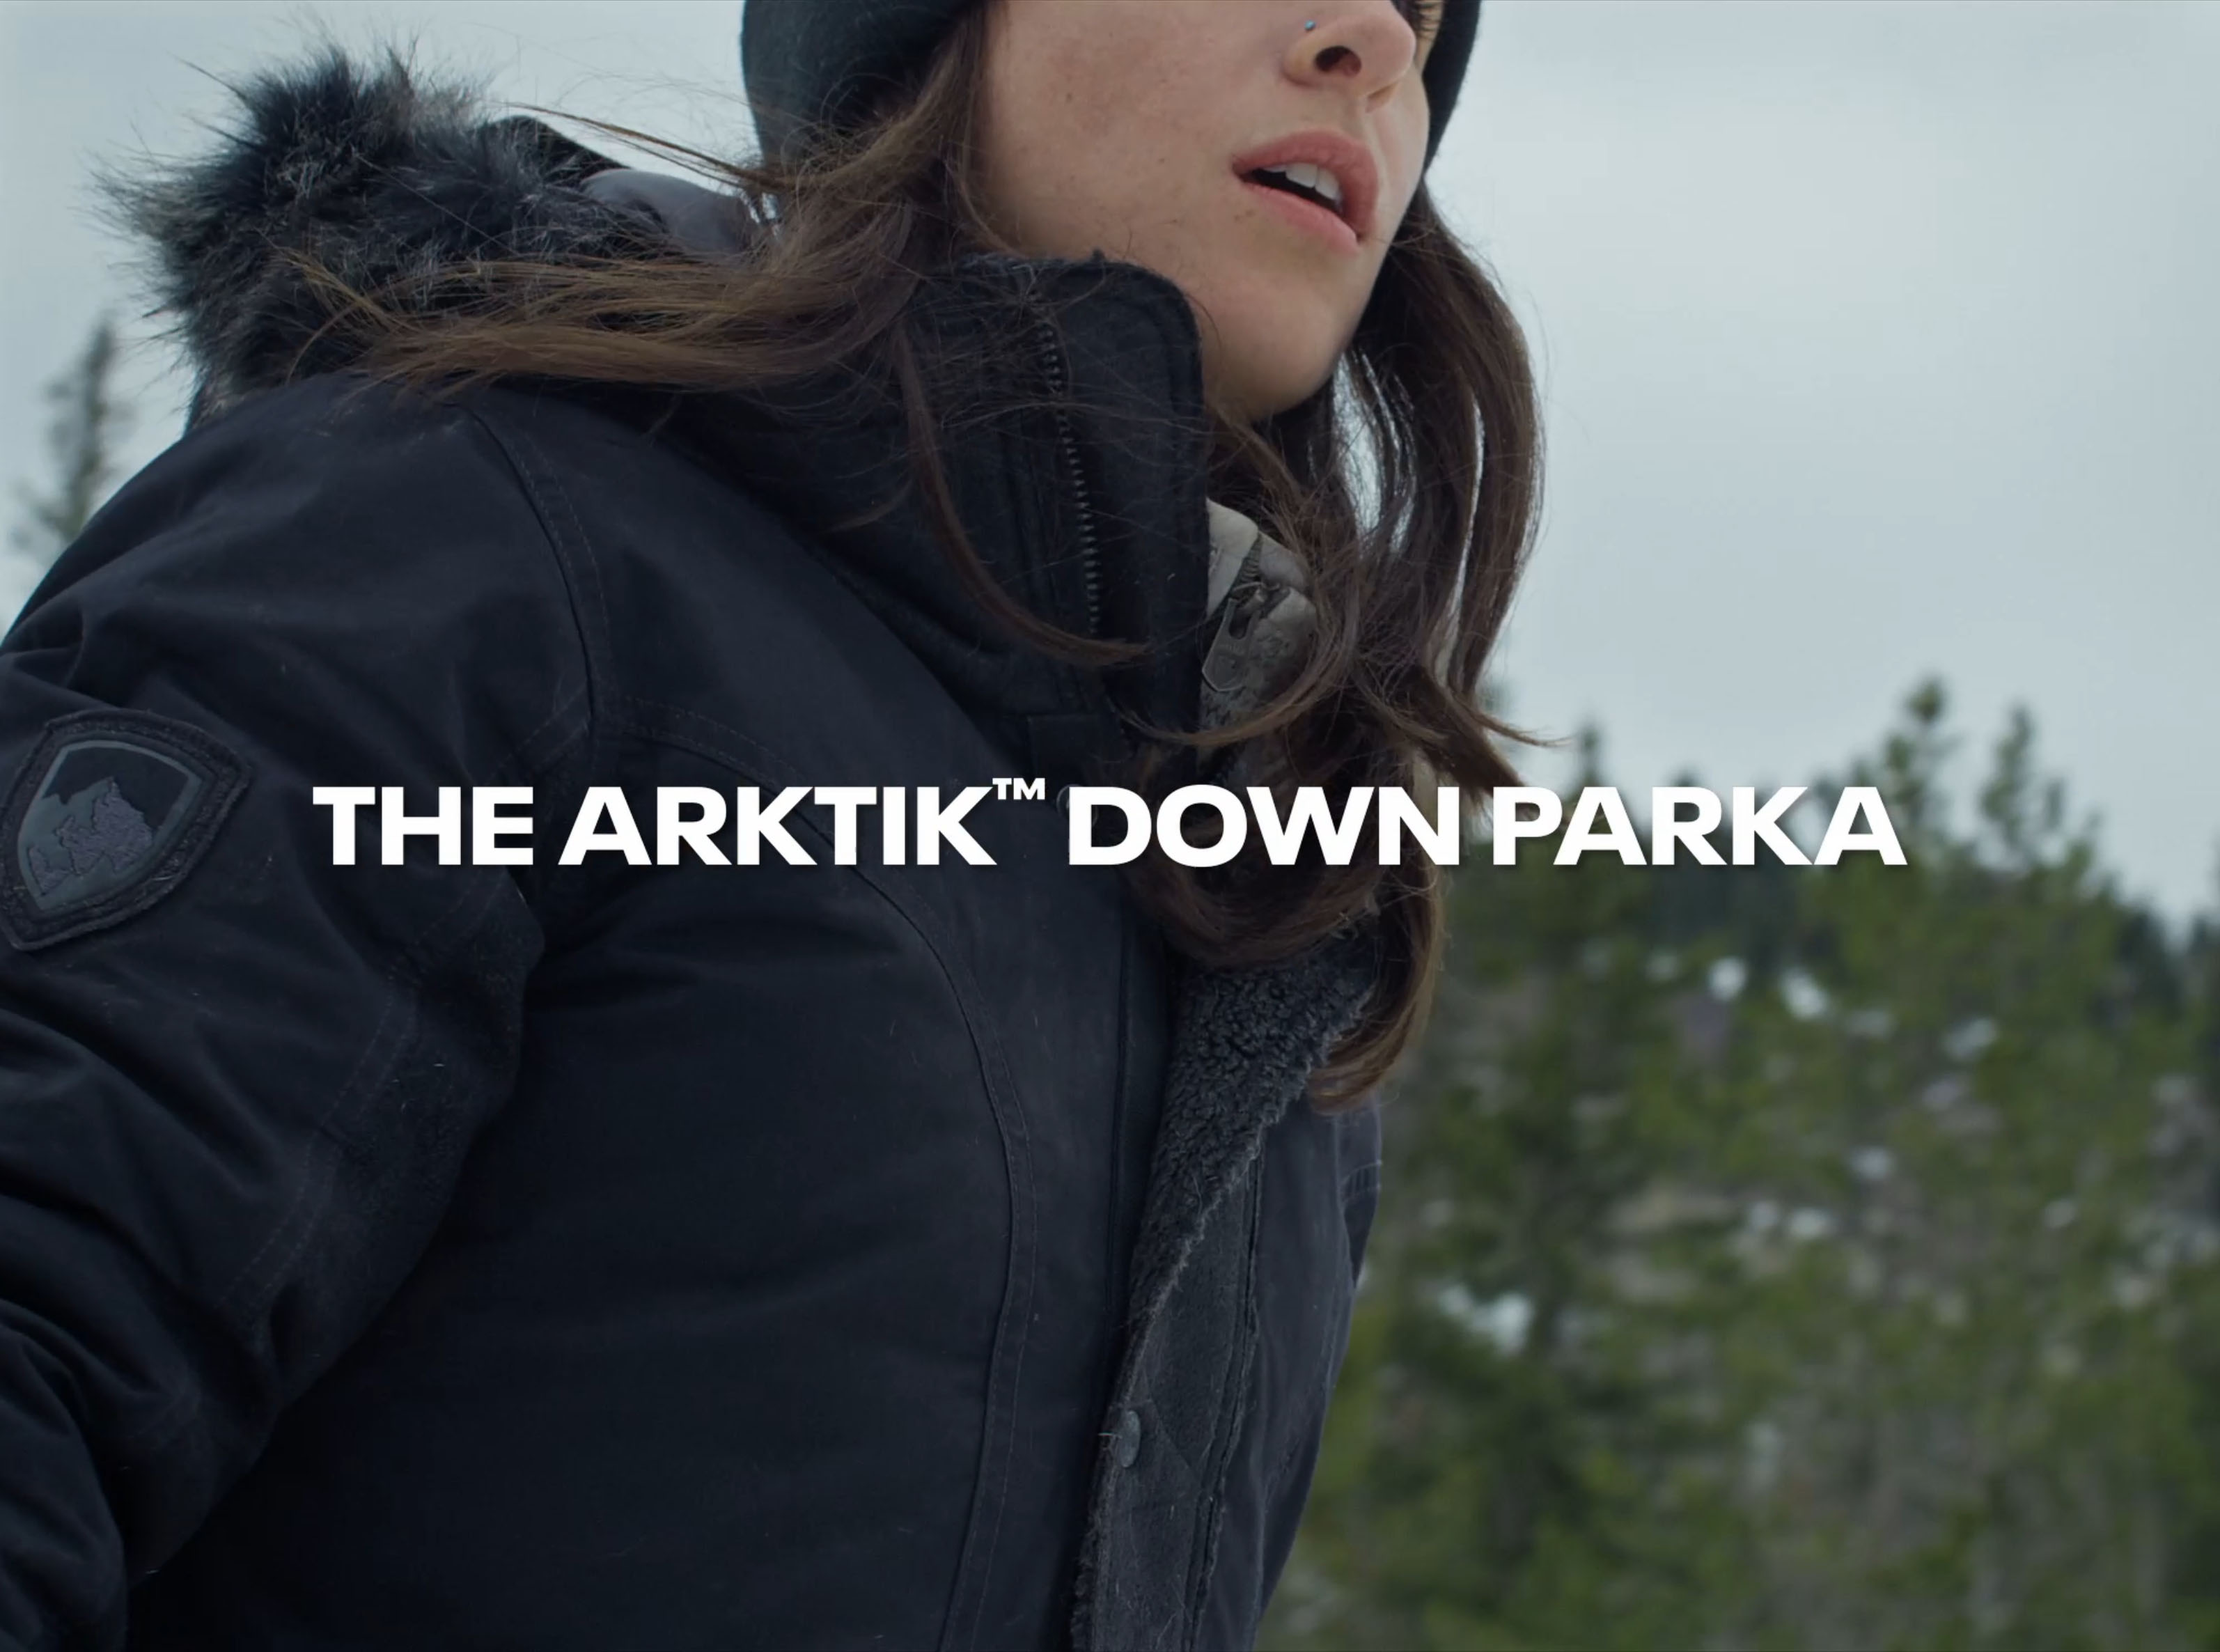 Kuhl Arktik Jacket, Raven, Medium  Beautiful jacket, Jackets, Clothes  design